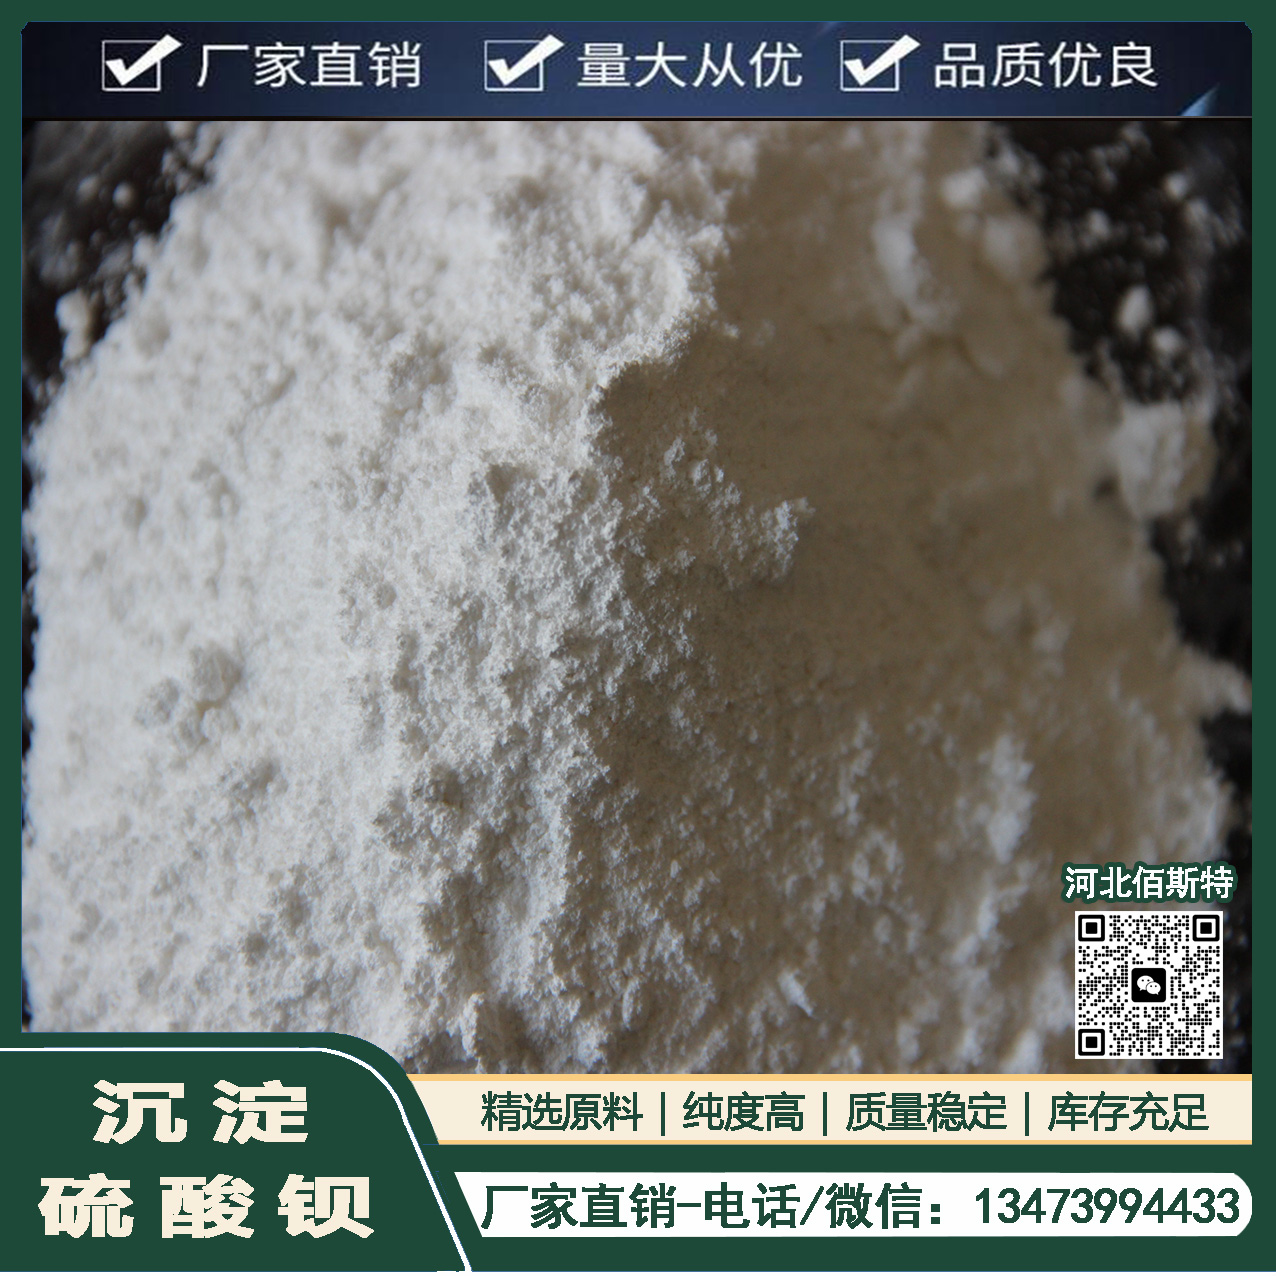 Brake pad Barium sulfate natural barite powder rubber adding engineering plastics fineness 1250 mesh whiteness 92